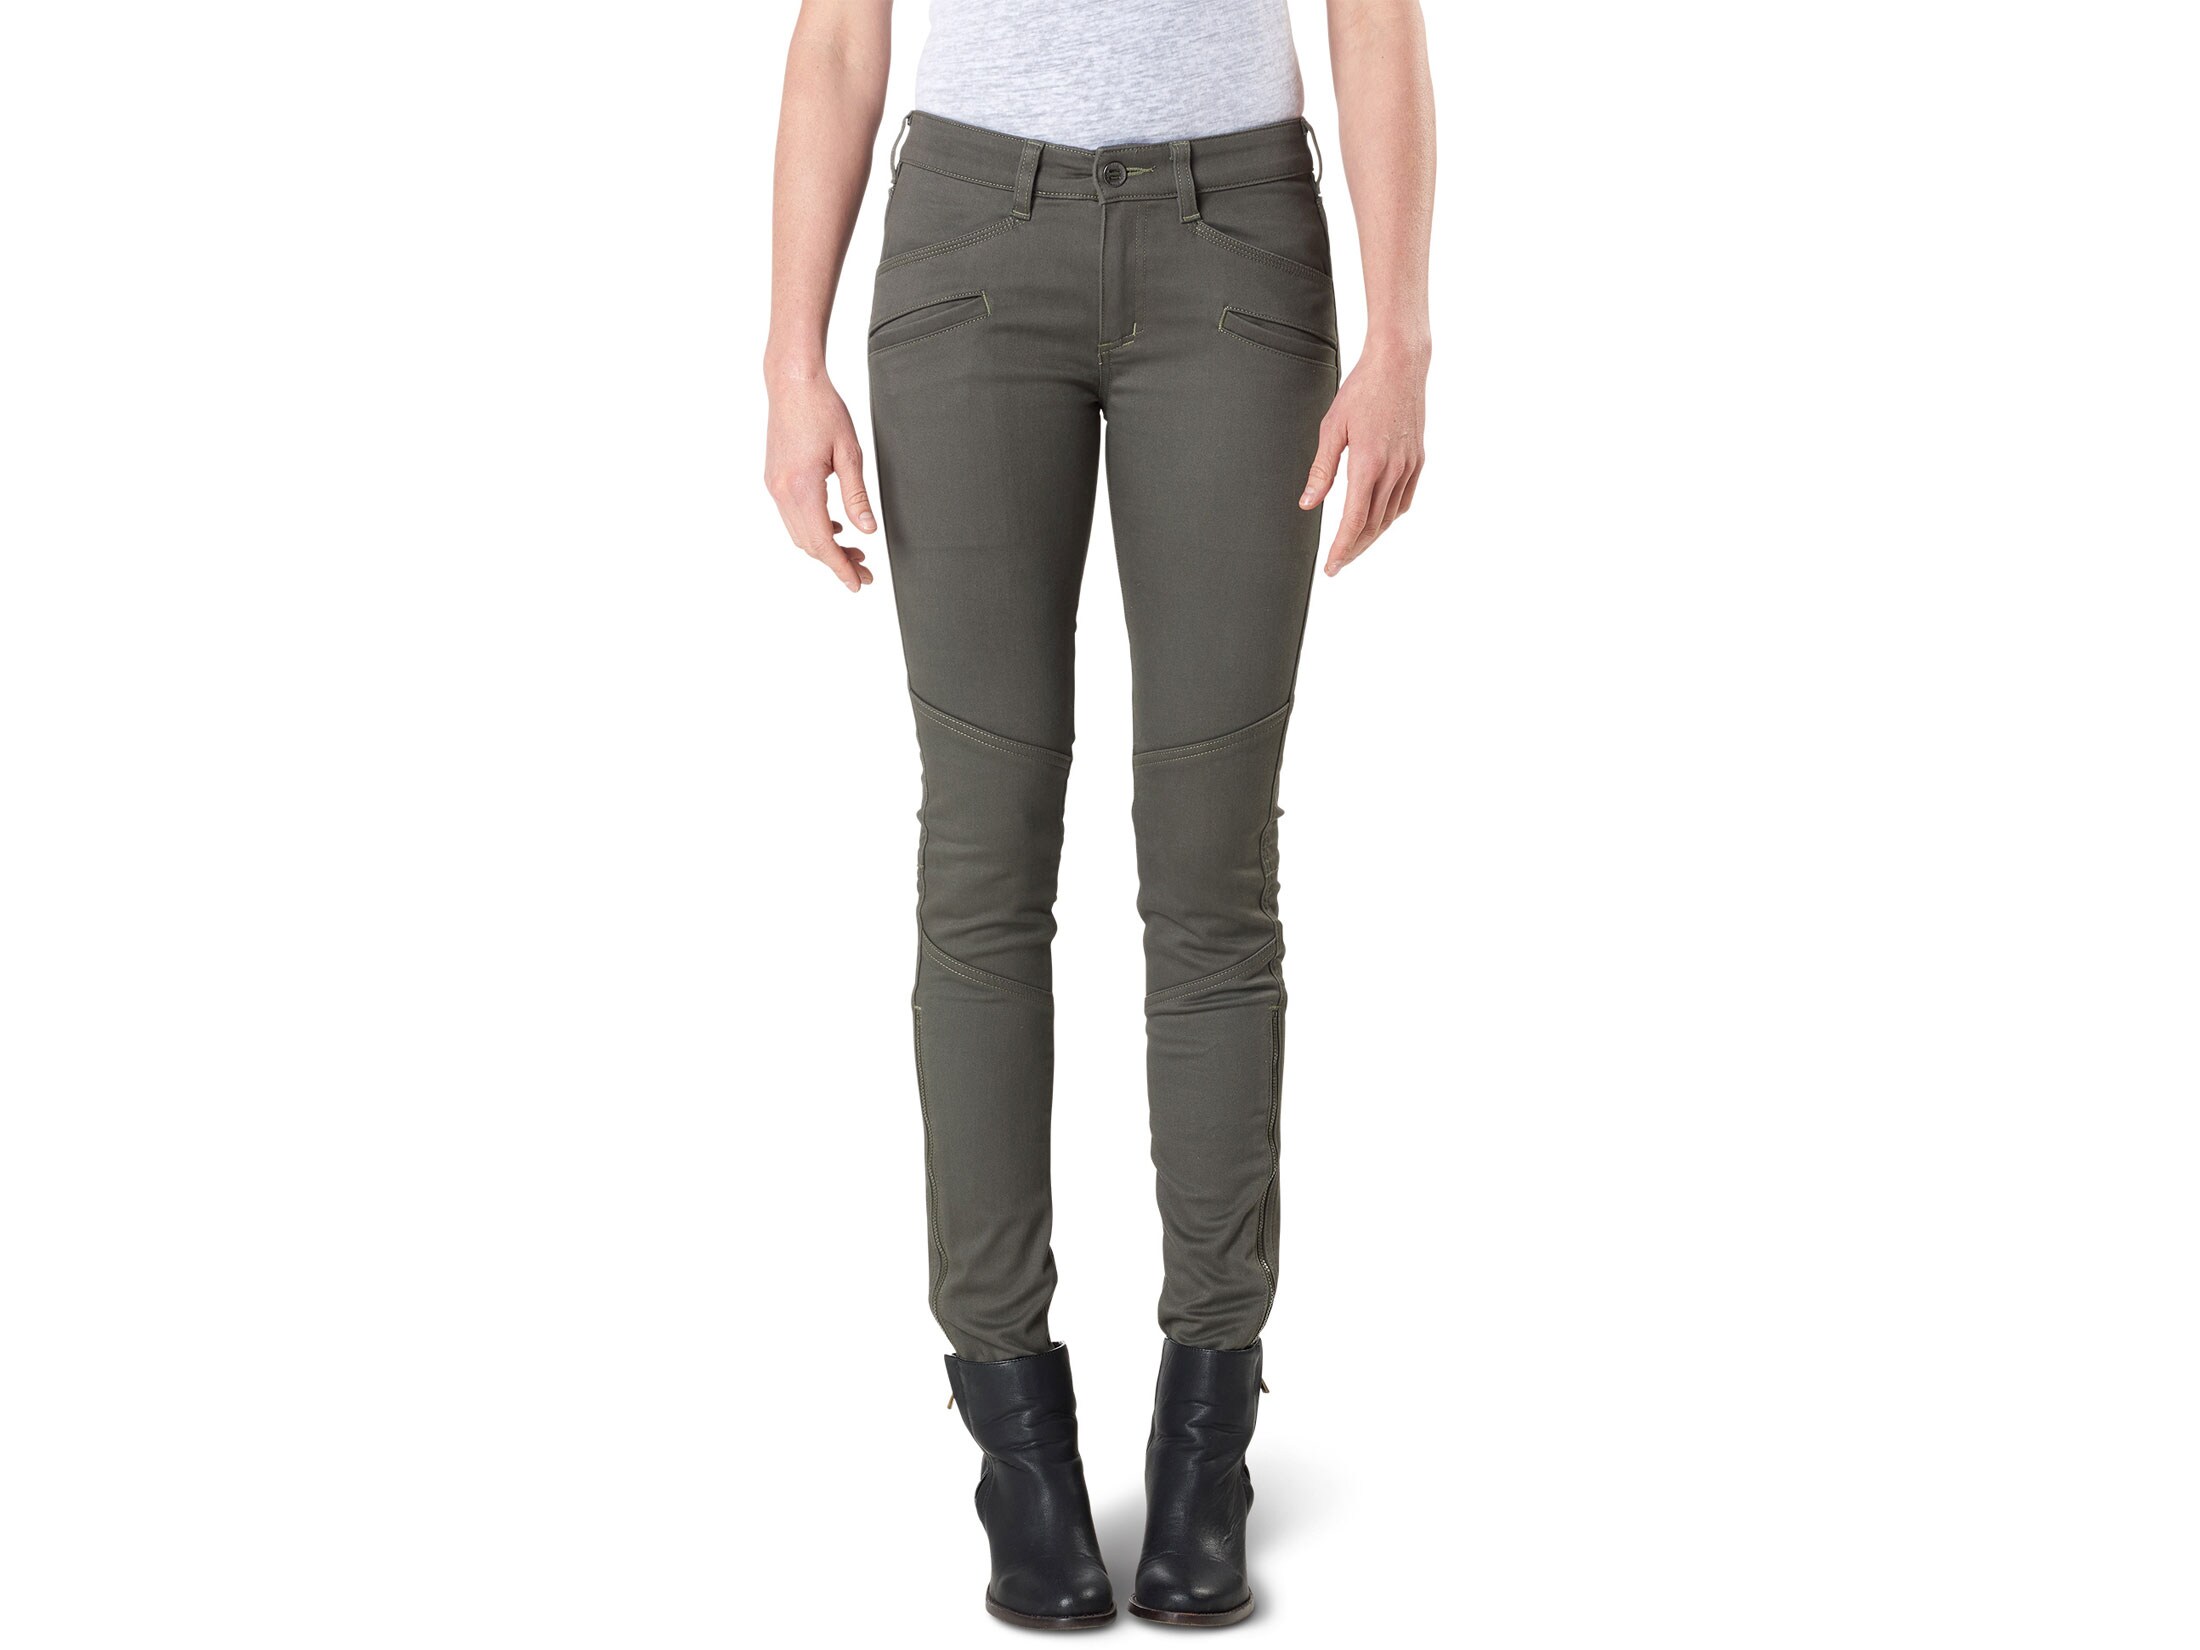 5.11 Women's Wyldcat Tactical Pants Cotton/Polyester Blend Black Size